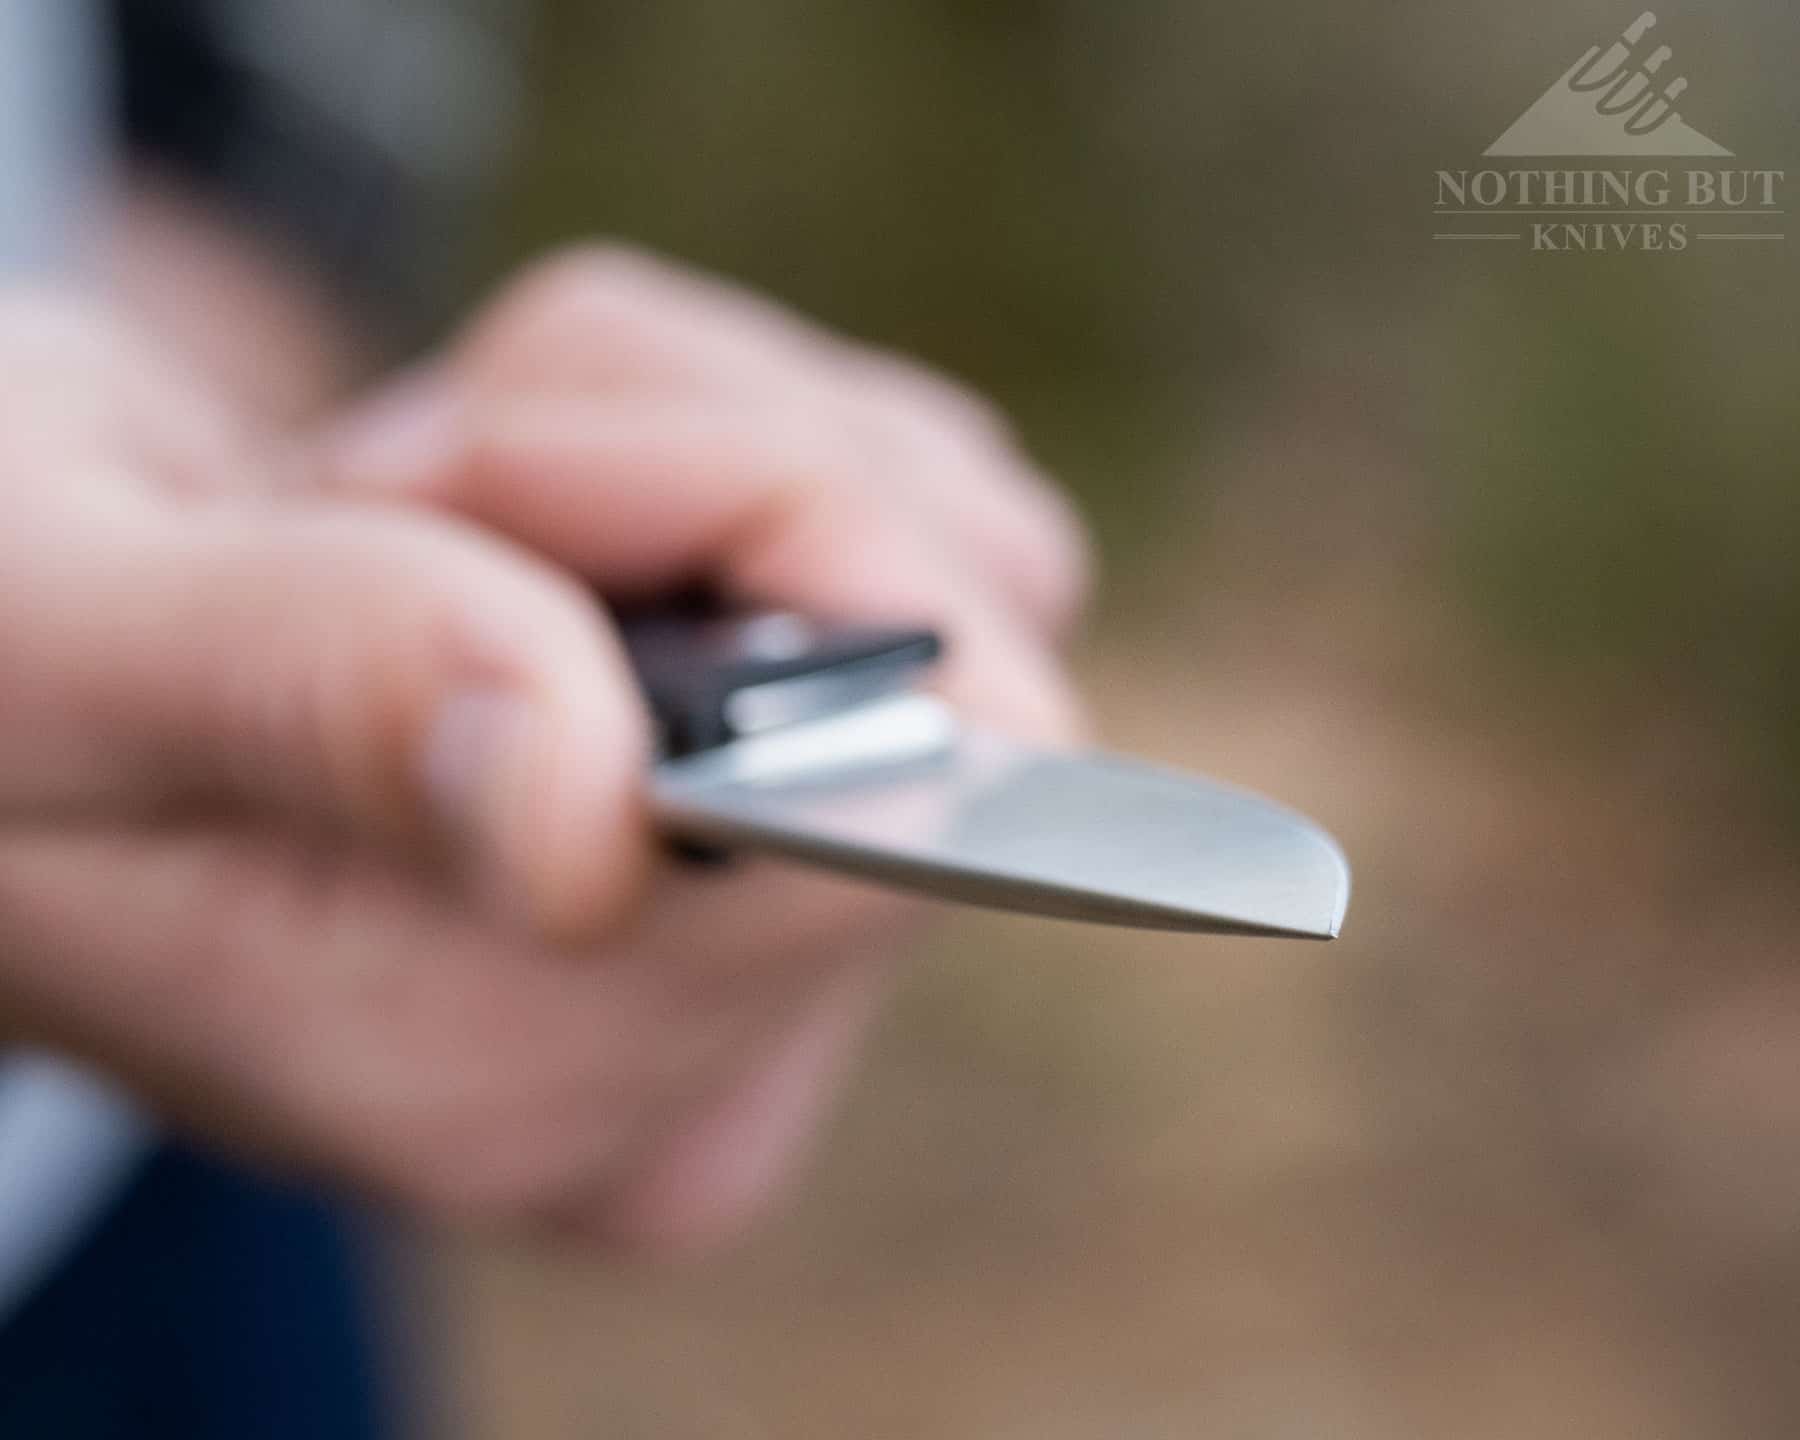 This shallow depth of field image shows the blade tip of the Kizer Vanguard Slicer Lockback pocket knife. 